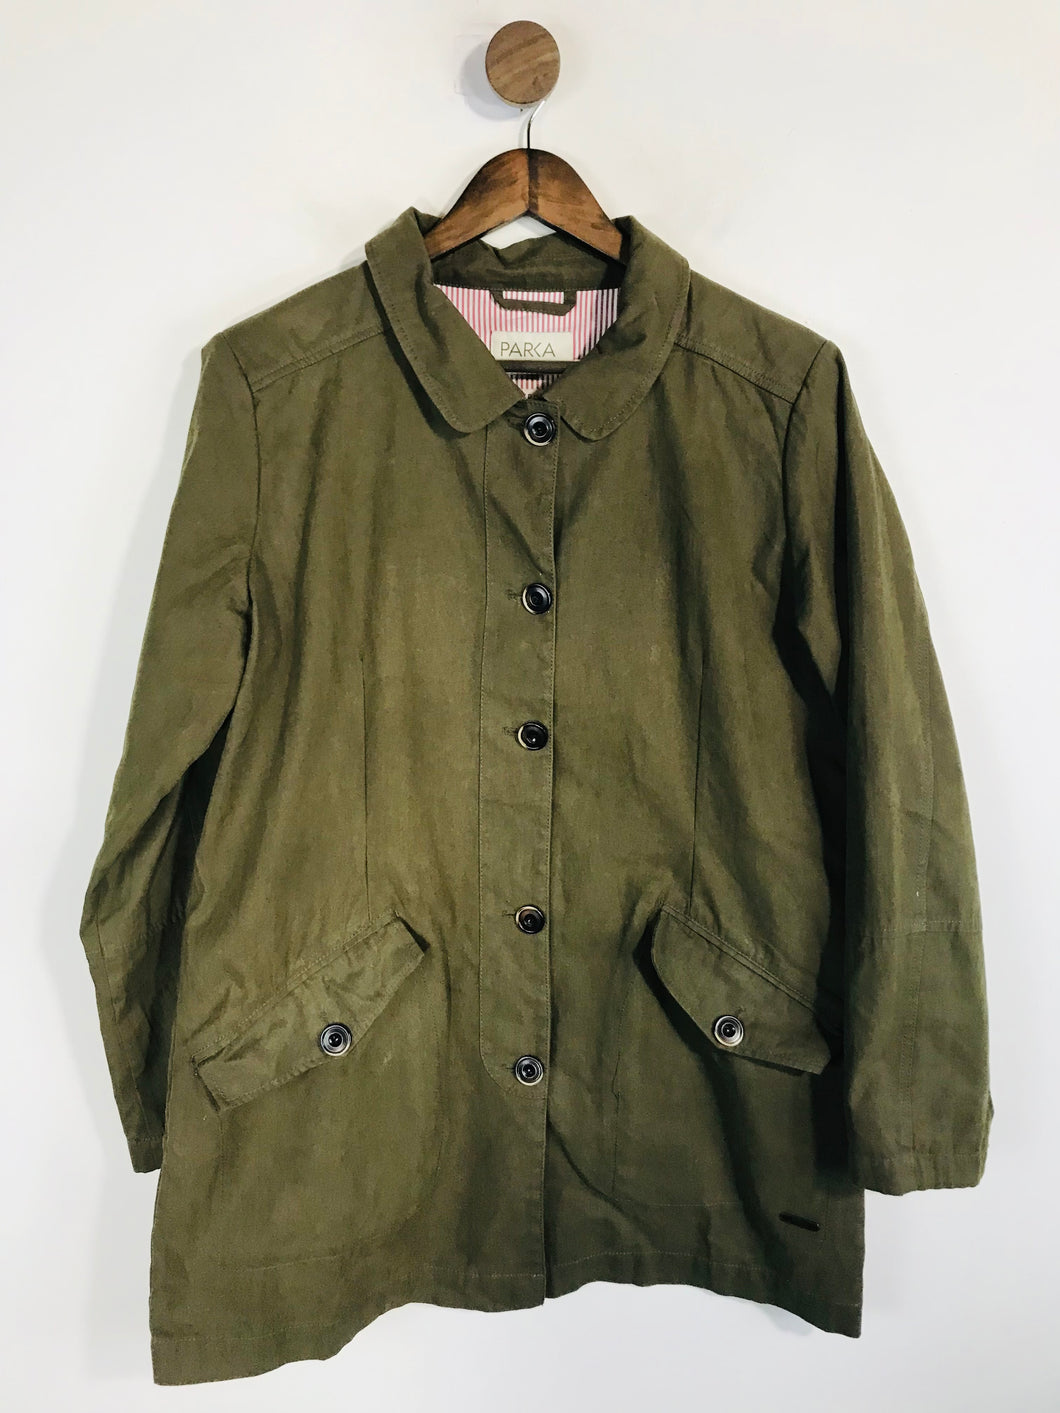 Parka London Women's Cotton Overcoat Coat | M UK10-12 | Green